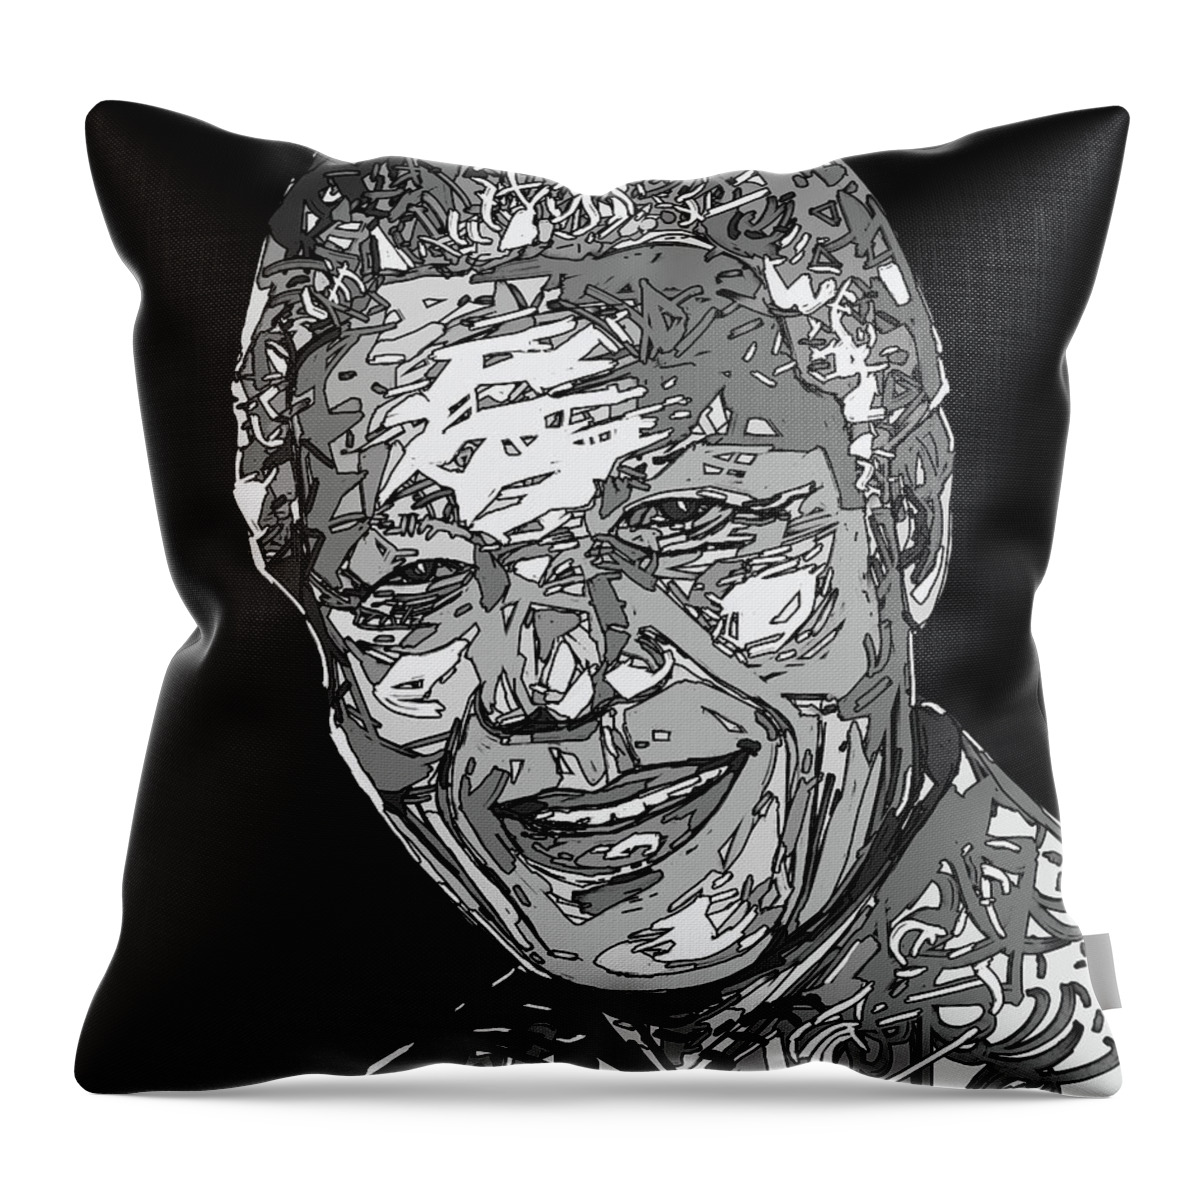 Nelson Mandela Throw Pillow featuring the digital art Nelson Mandela by Bekim M